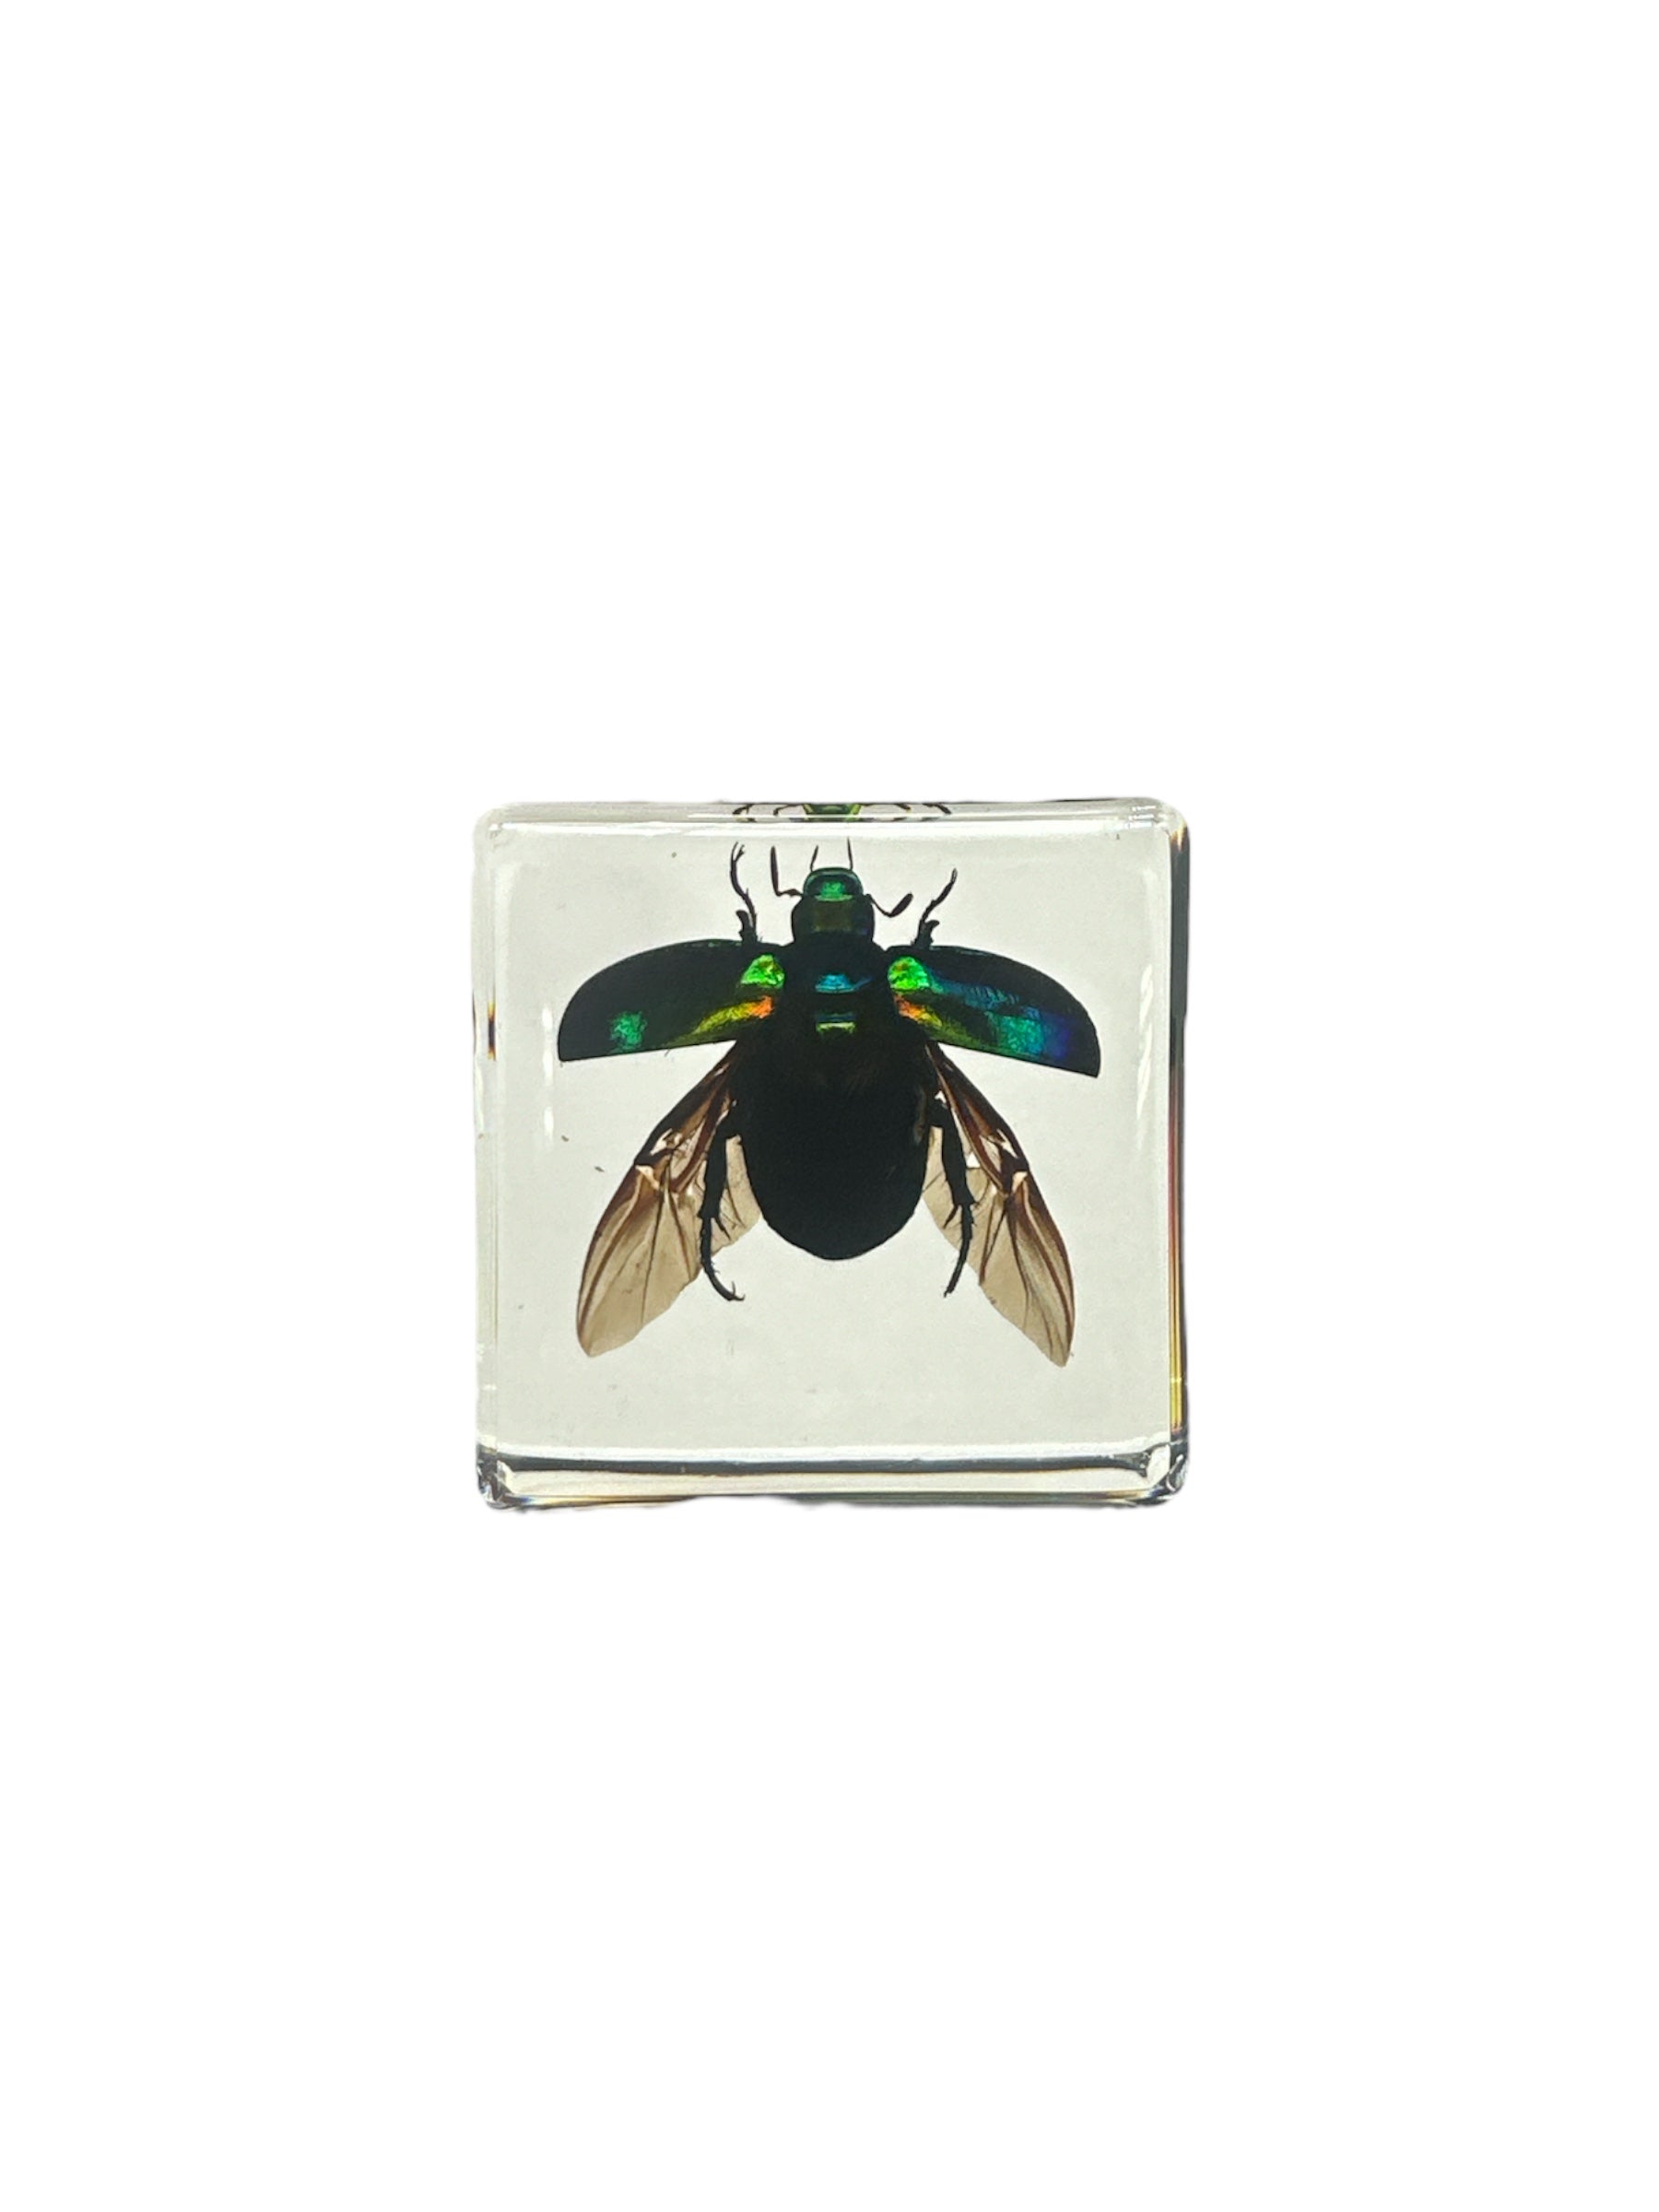 Colorful Scarab Beetle (Mimela splendens gyllenahl) - Specimen In Resin